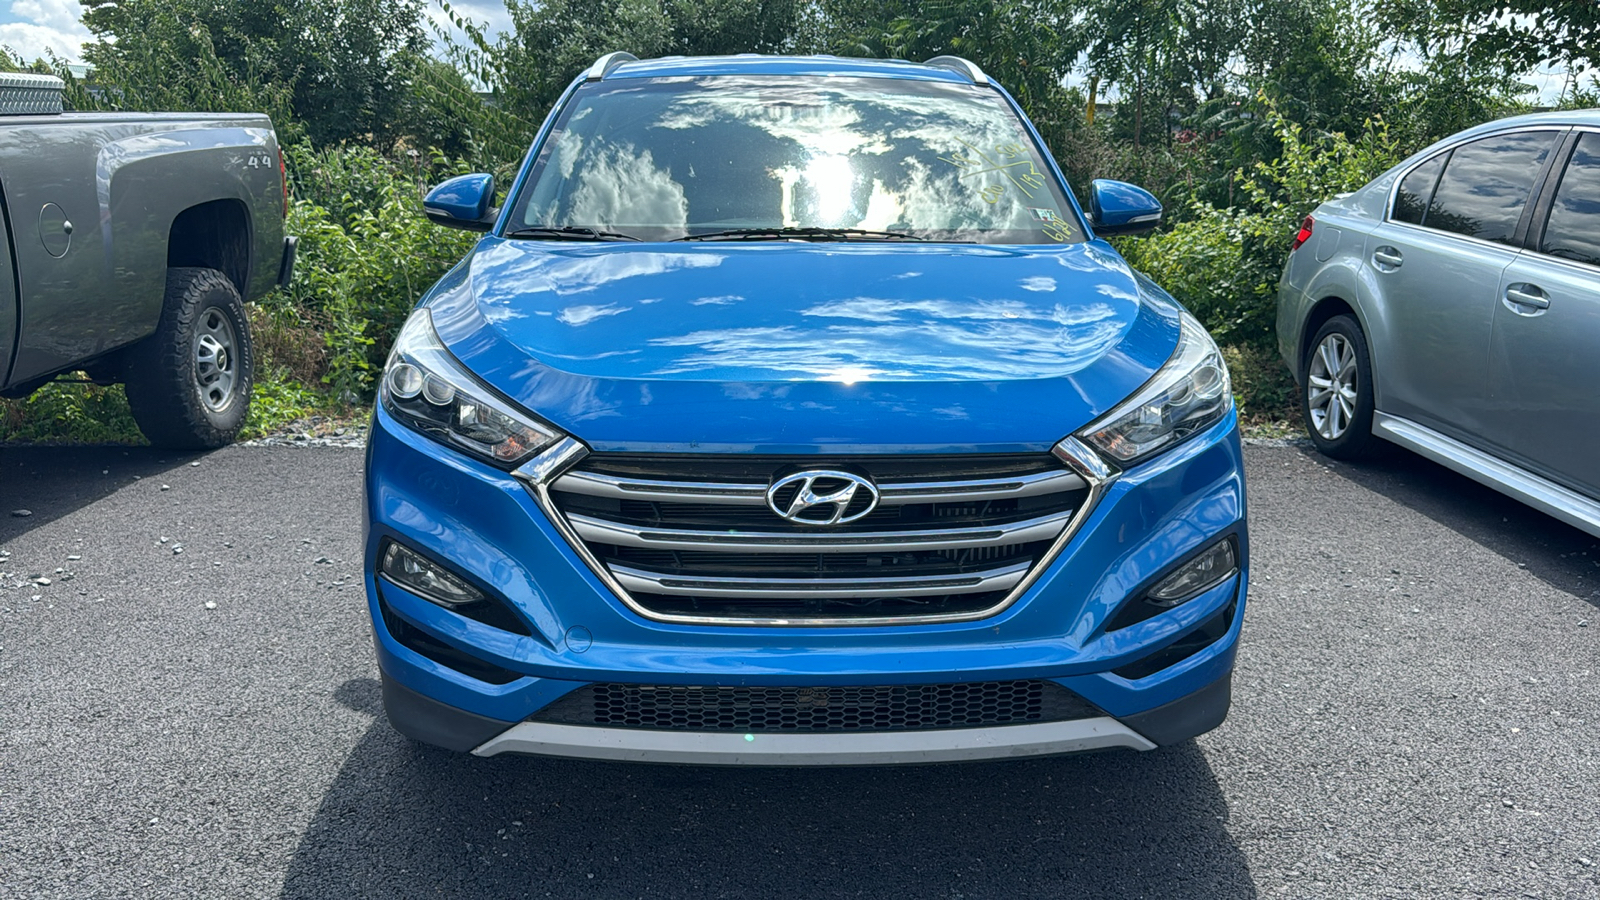 2018 Hyundai Tucson Limited 2